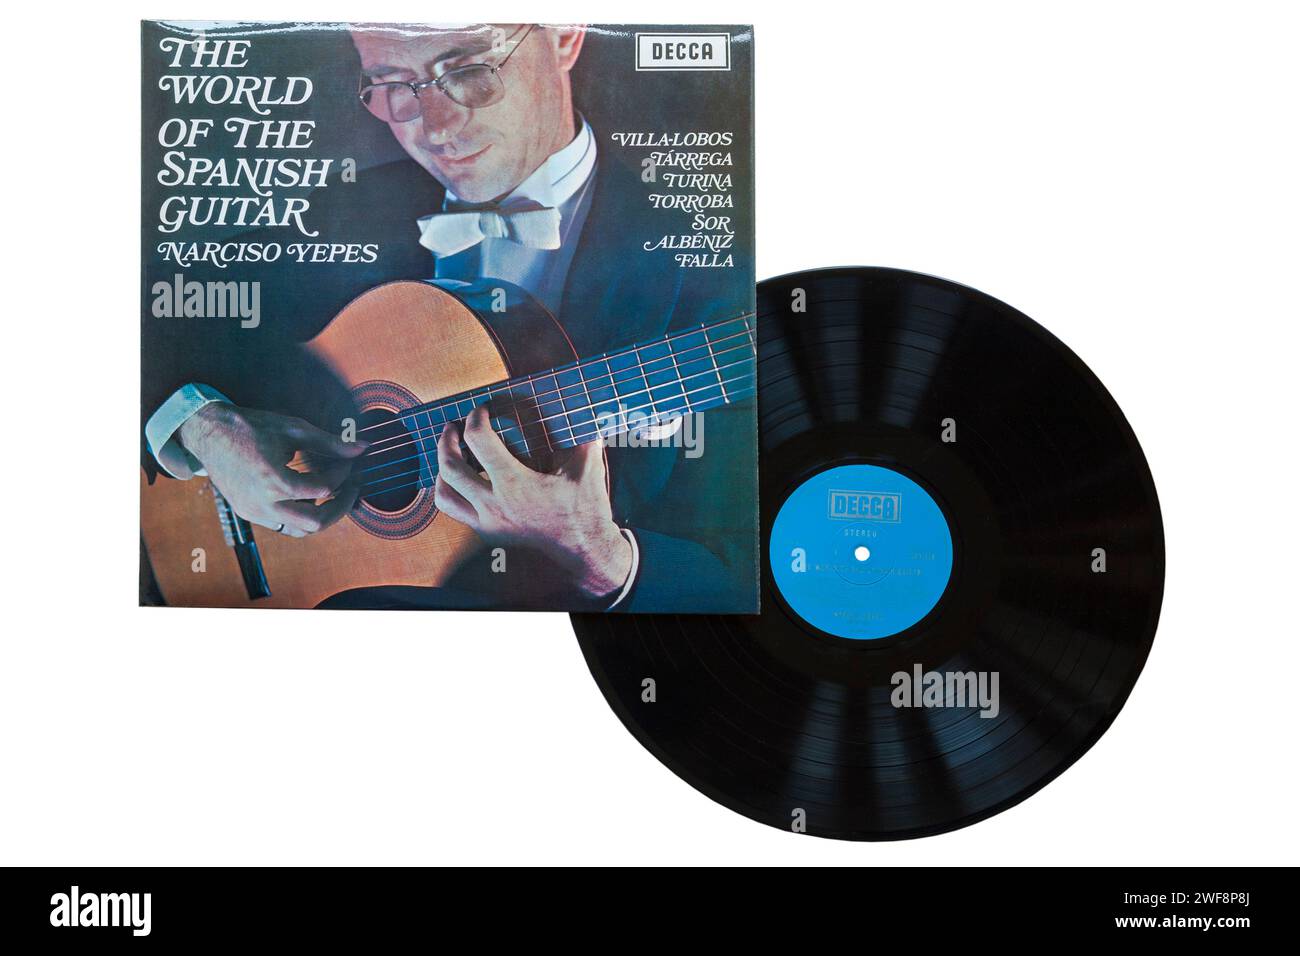 Narciso Yepes The World of the Spanish Guitar Vinyl-Album-Cover isoliert auf weißem Hintergrund -1971 Stockfoto